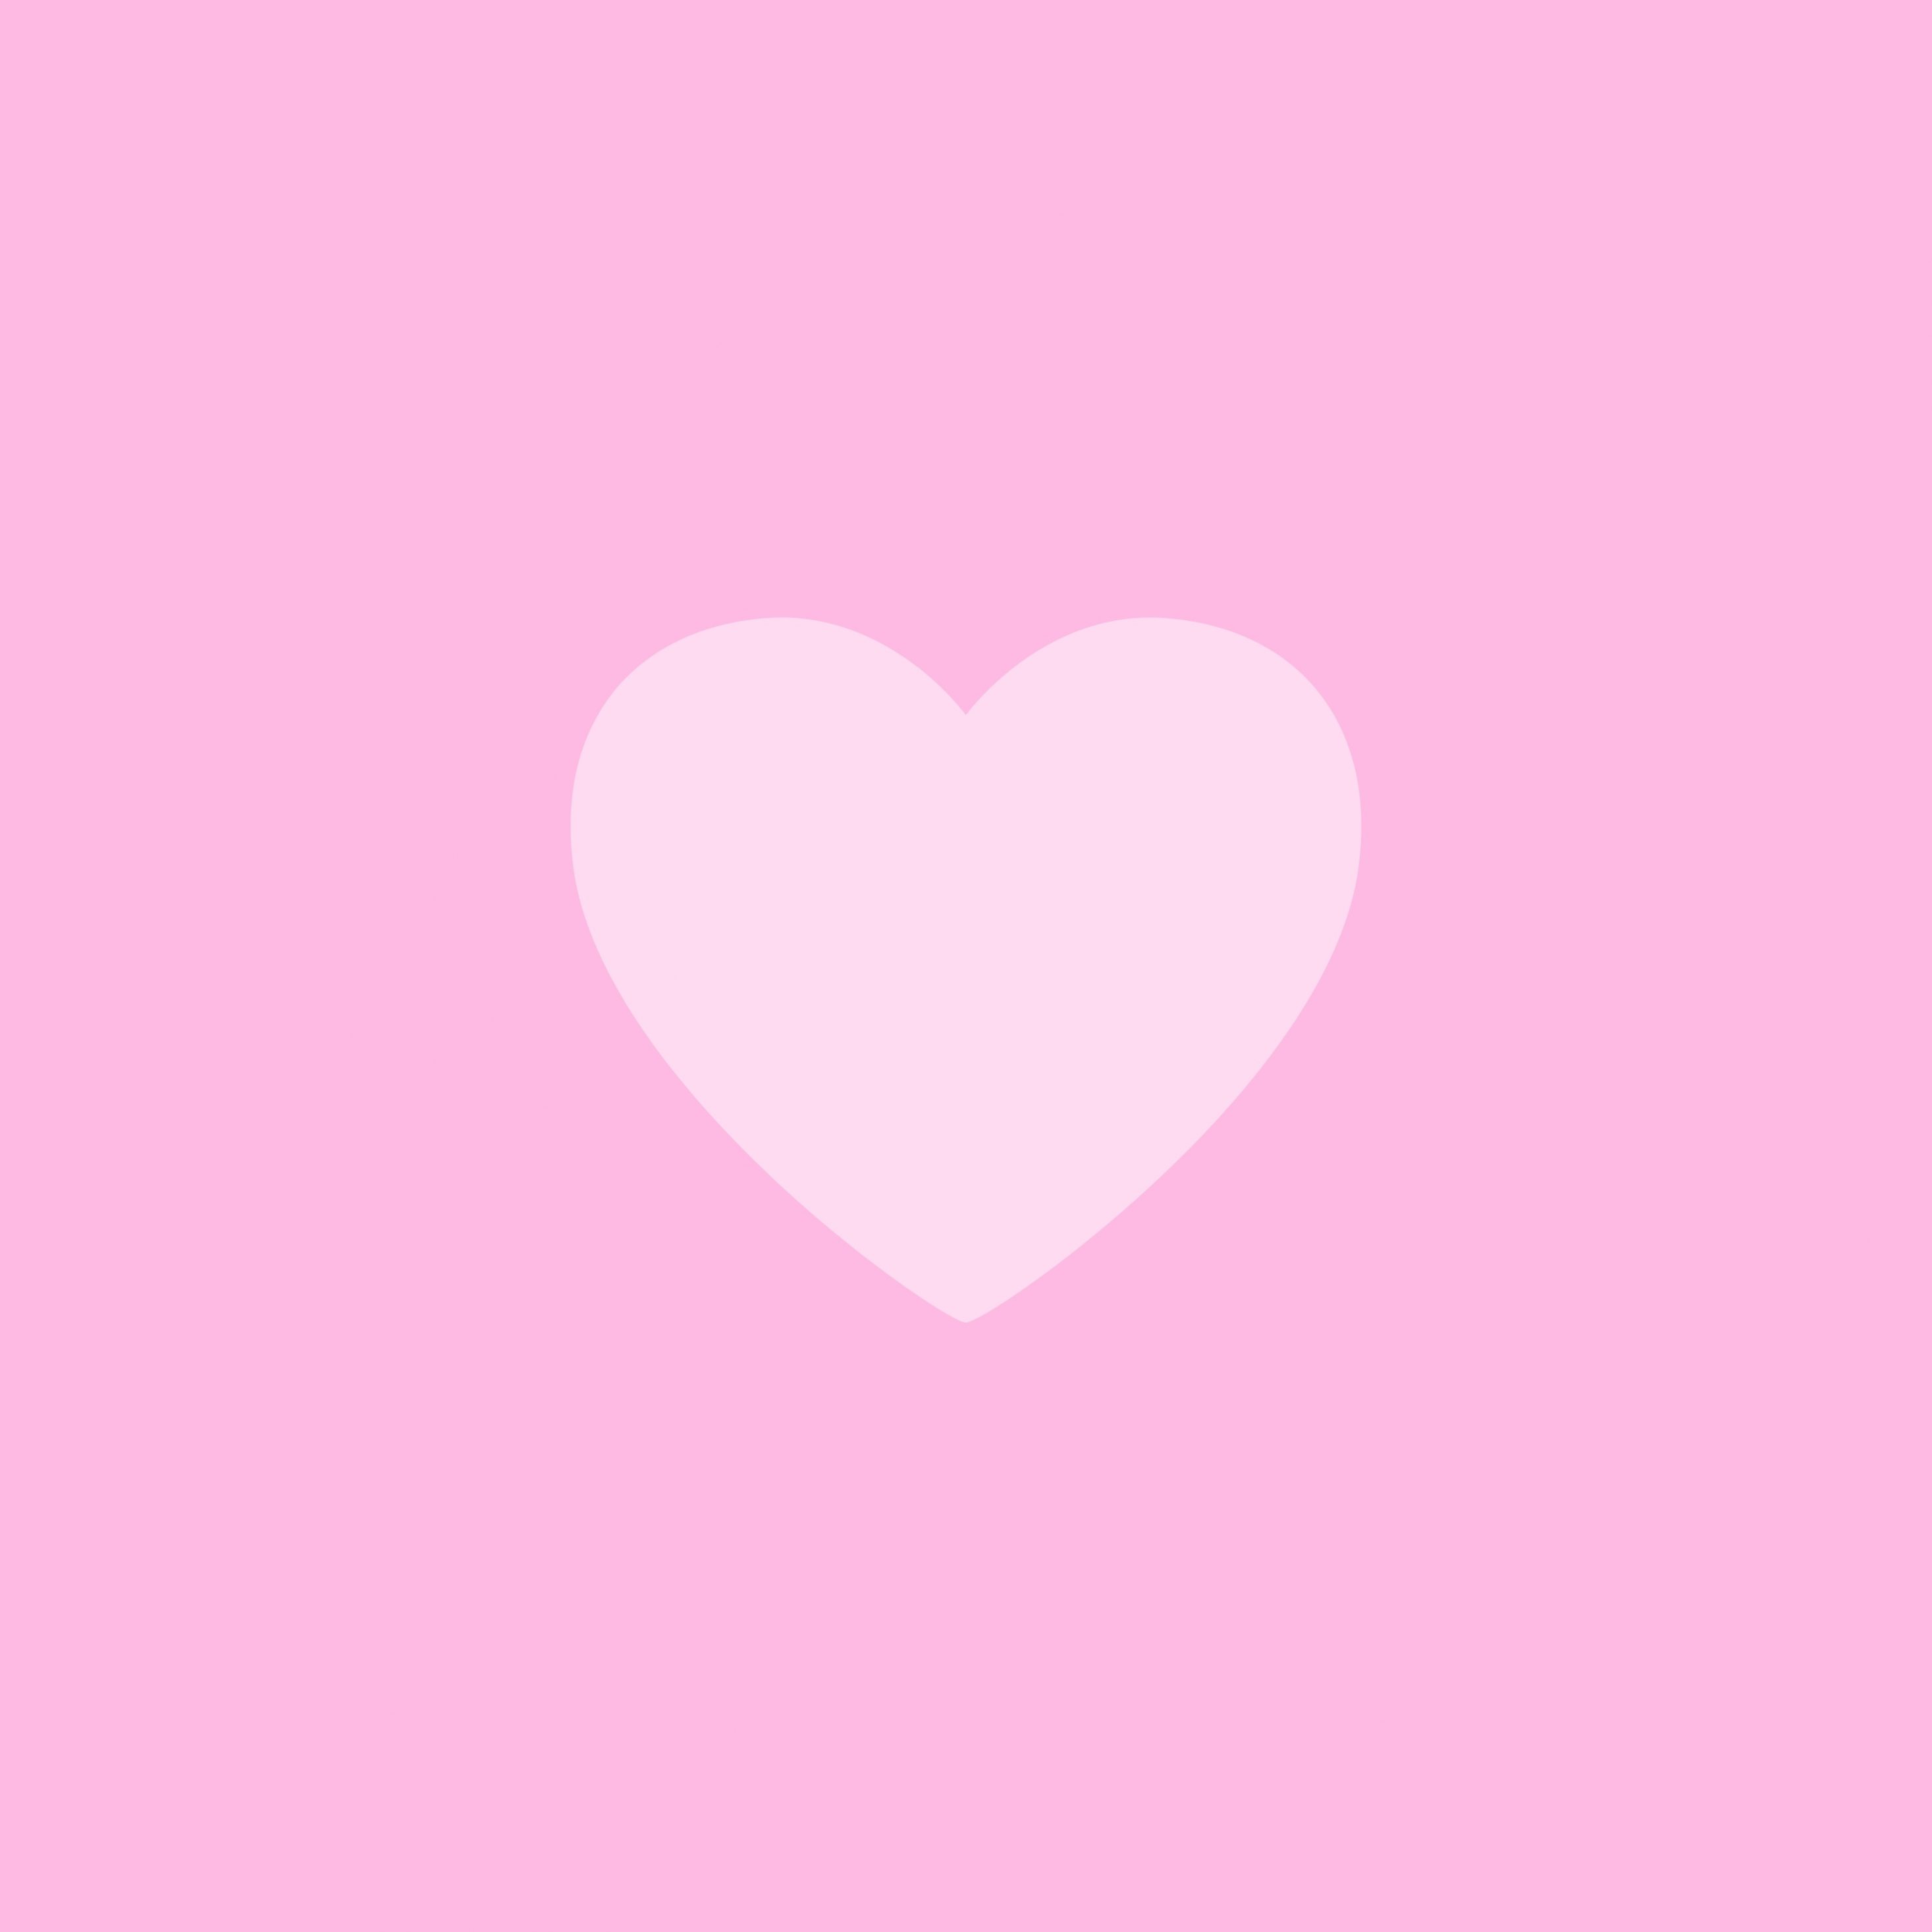 Love Heart Pink Background iPad Wallpaper - HD iPad Wallpapers 4k